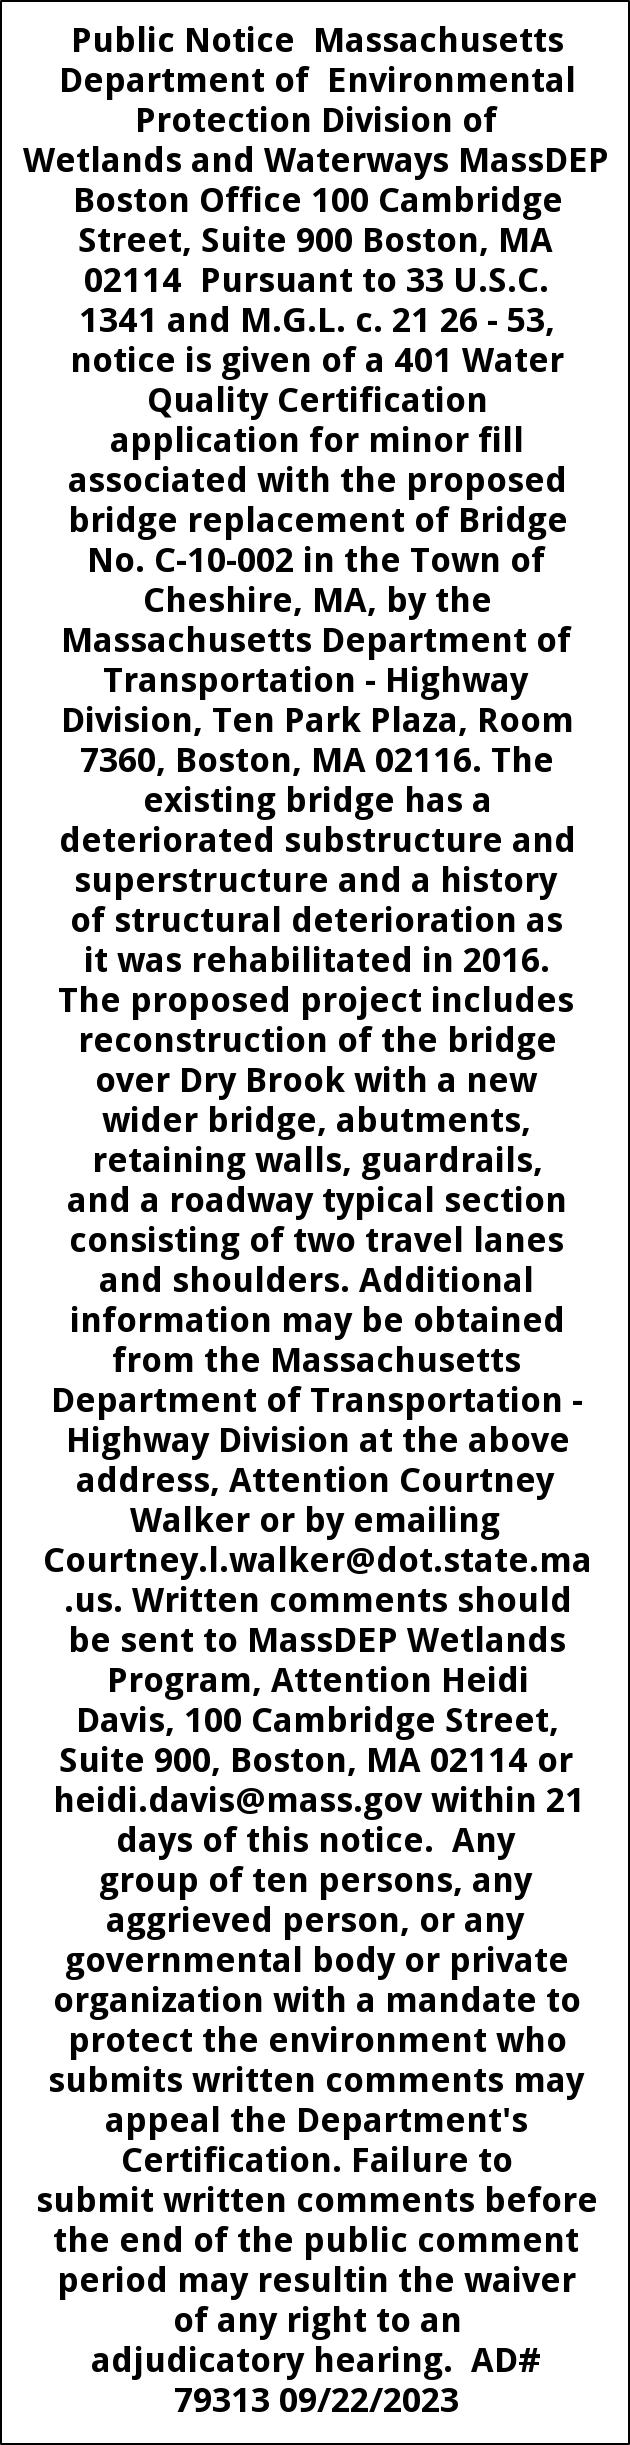 Public Notice, MassDep Division of Wetlands and Waterways, Boston, MA